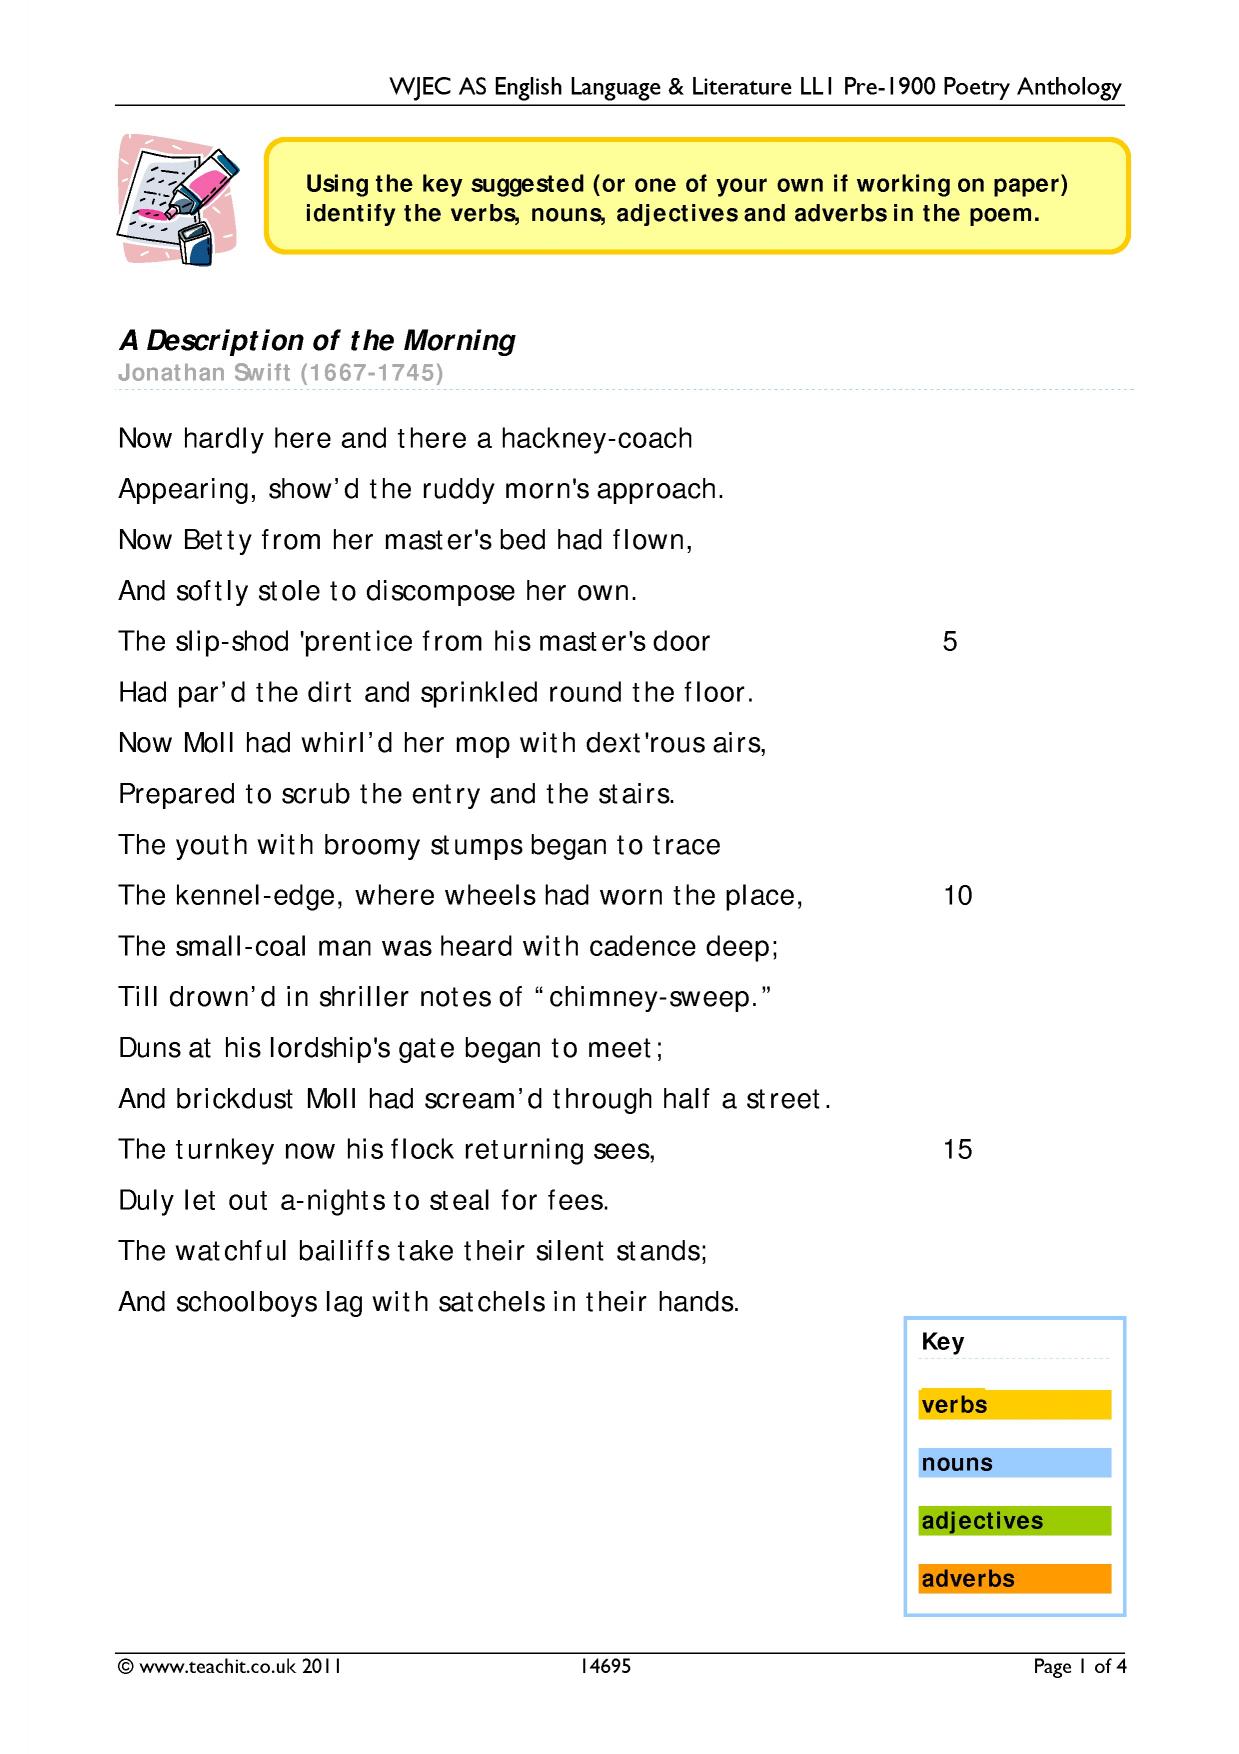 sunday morning poem analysis